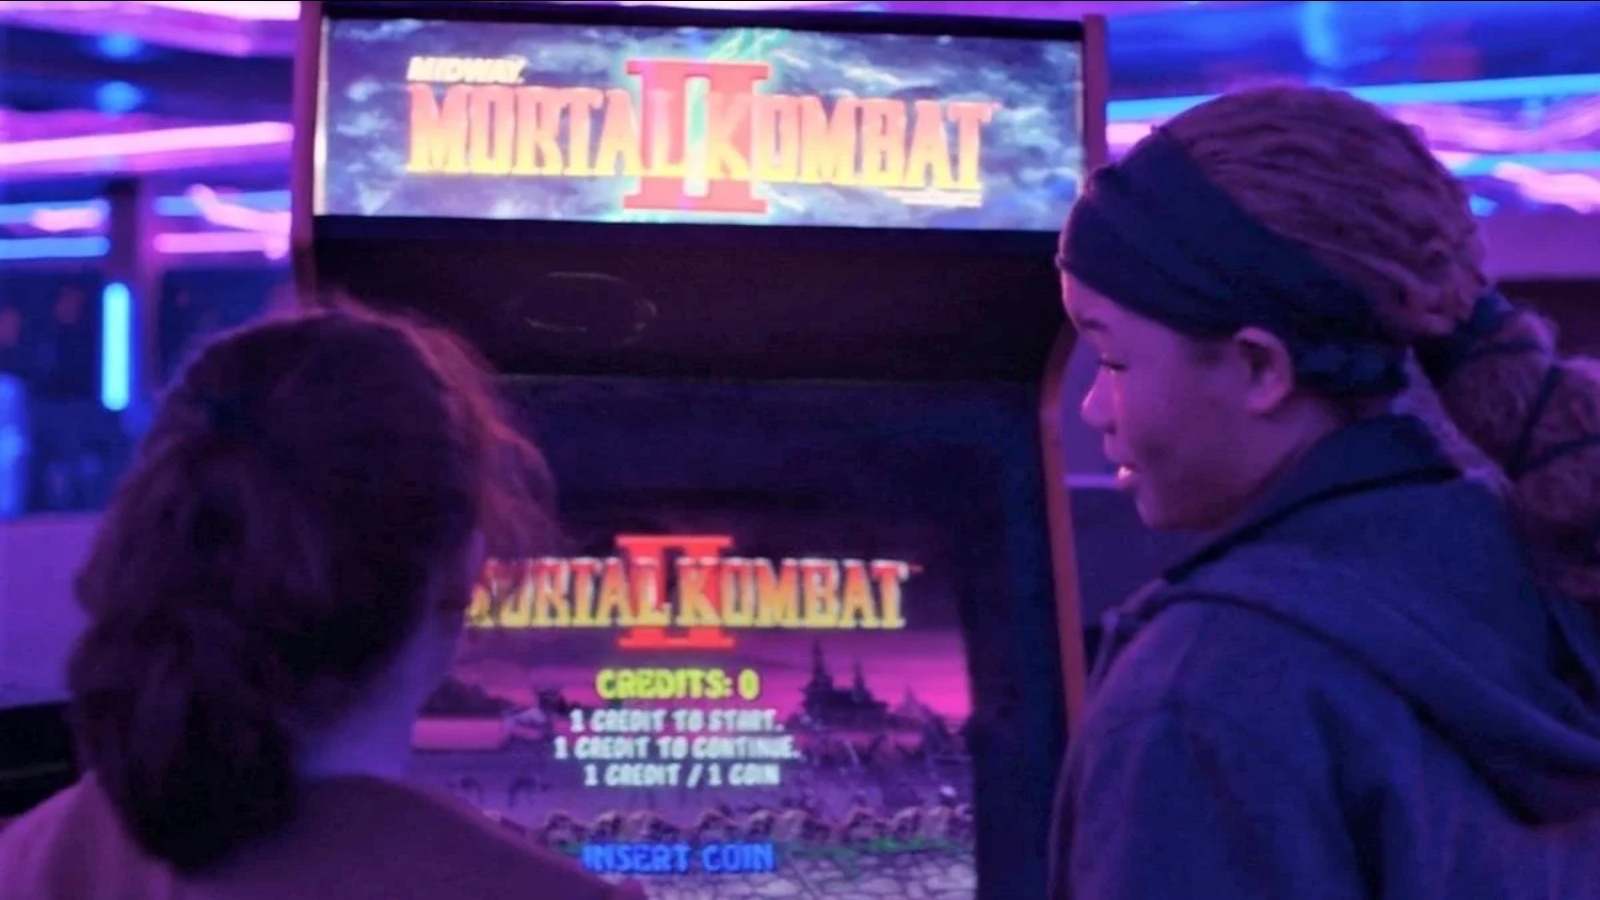 Mortal Kombat' Creator Ed Boon Explains How New Fatalities Are Made